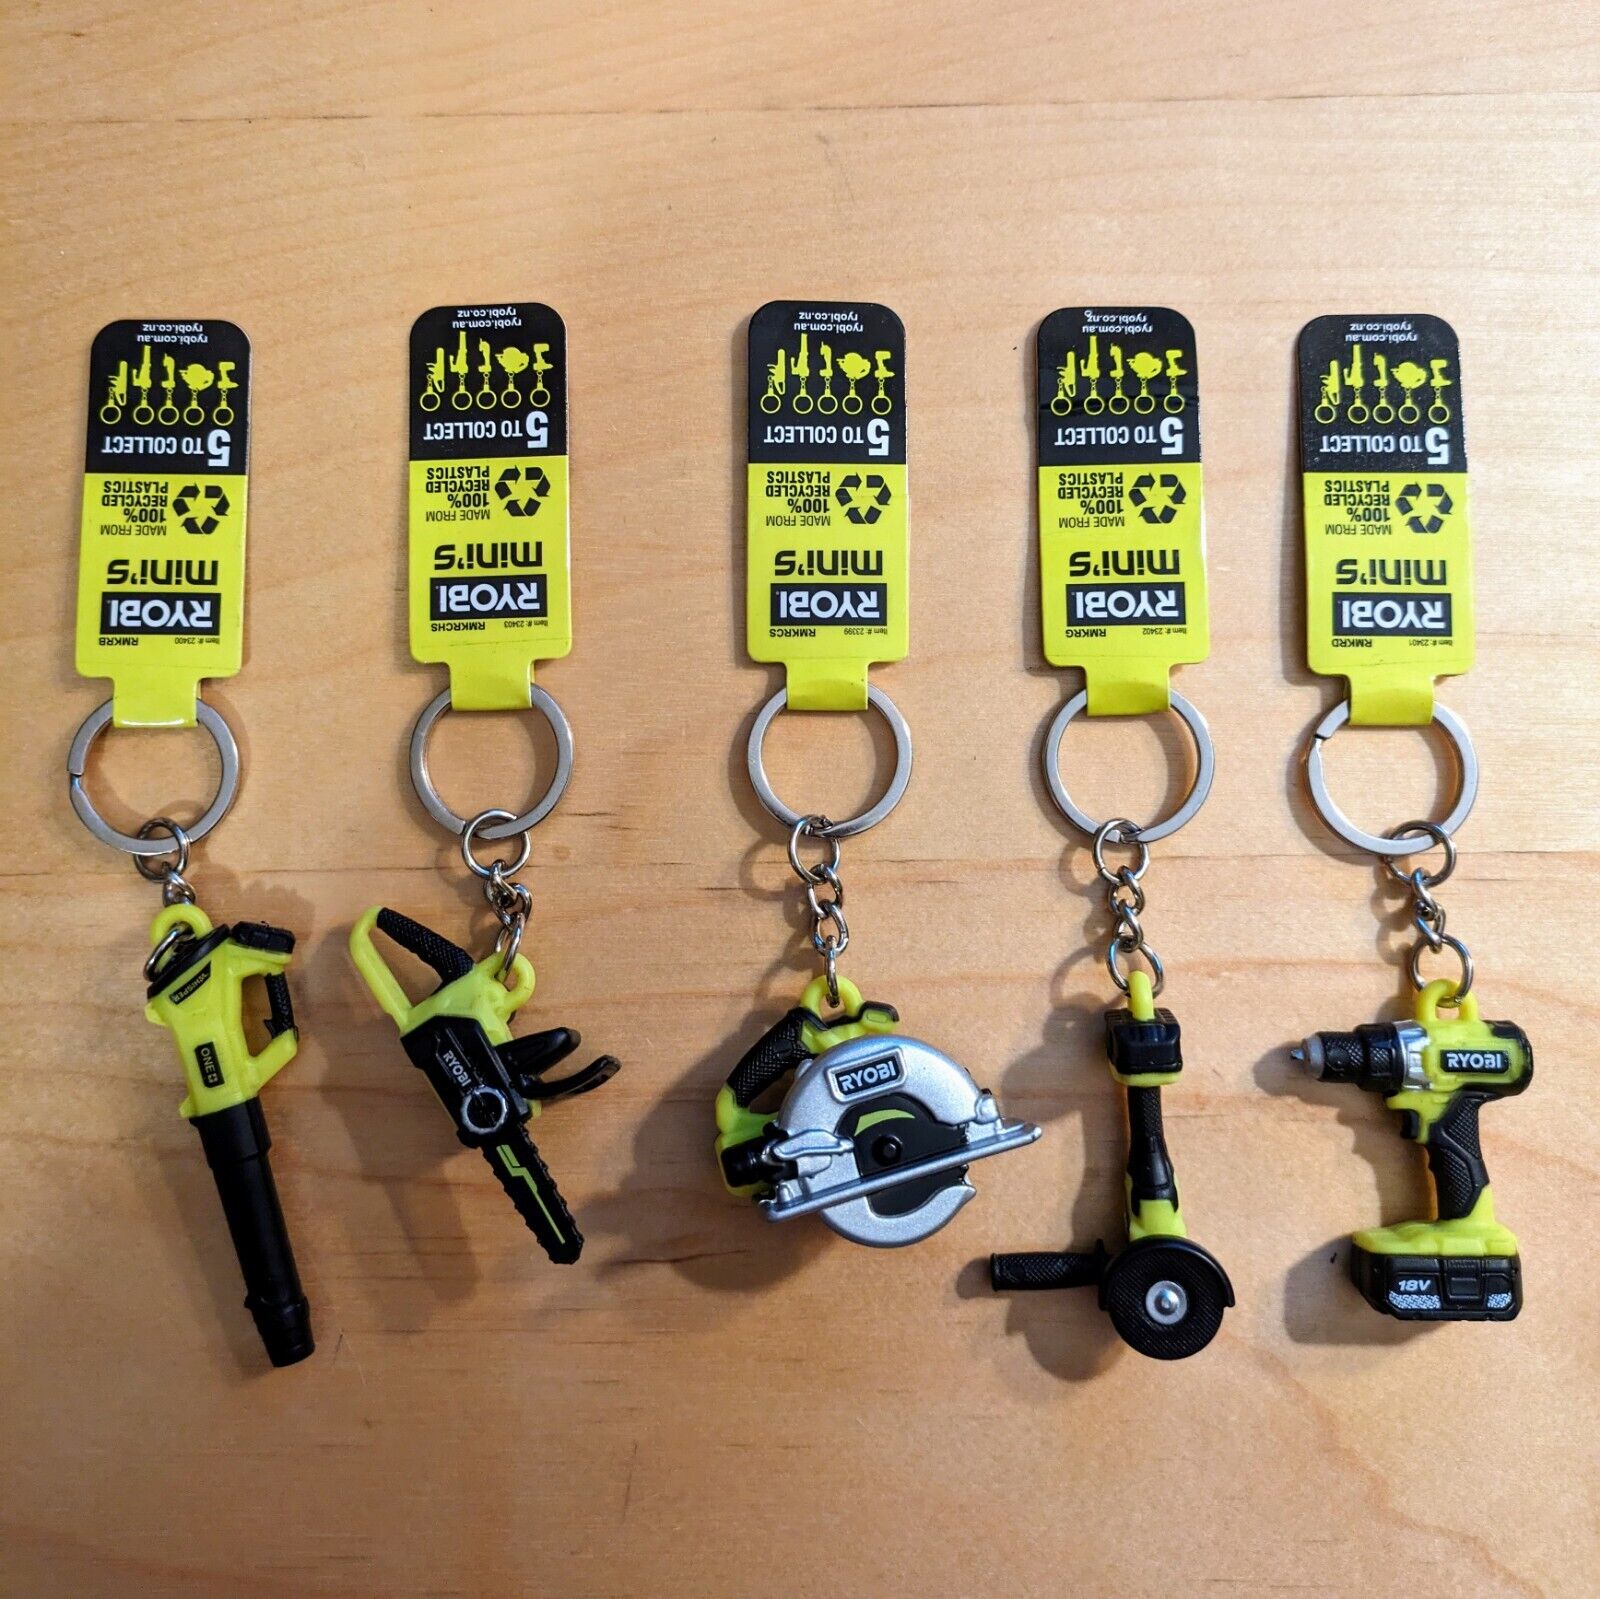 RYOBI Mini’s Keyring Keychain One+ Power Tools - Complete set of 5 - NEW